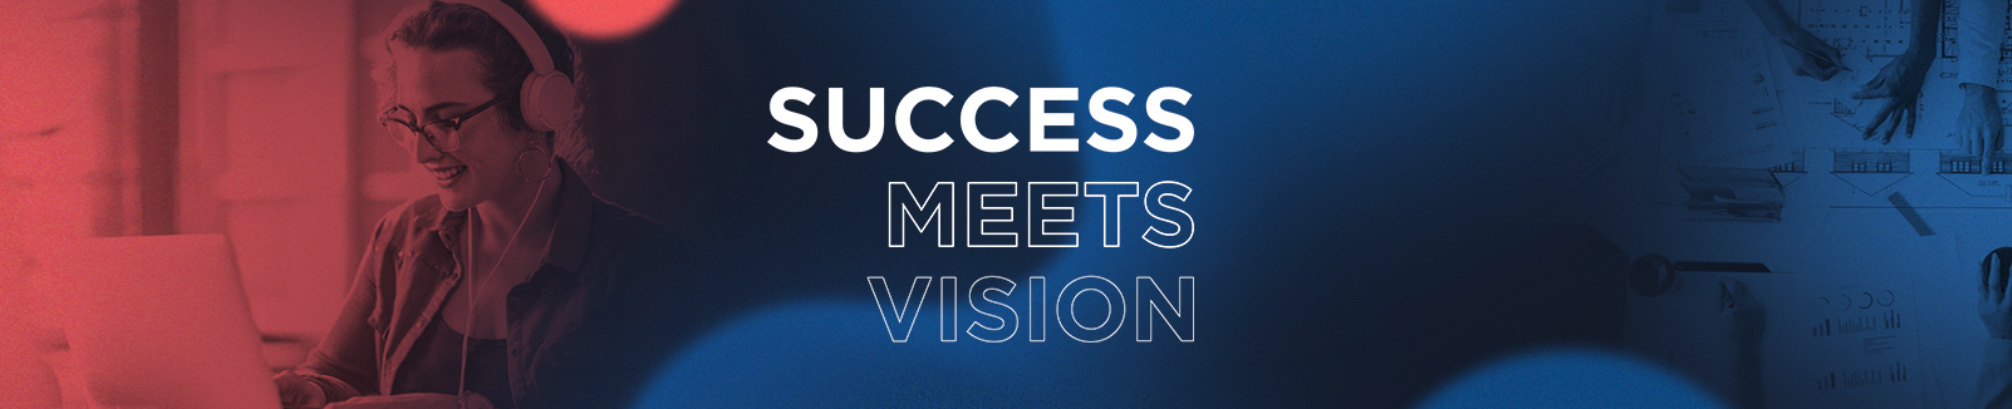 SM Vision's profile banner